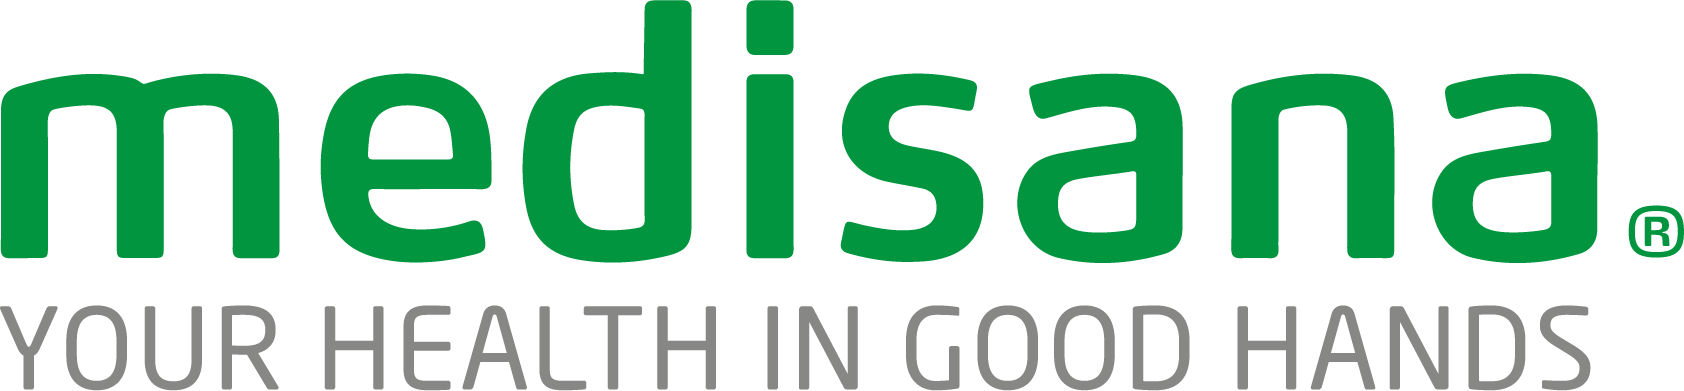 medisana GmbH logo.